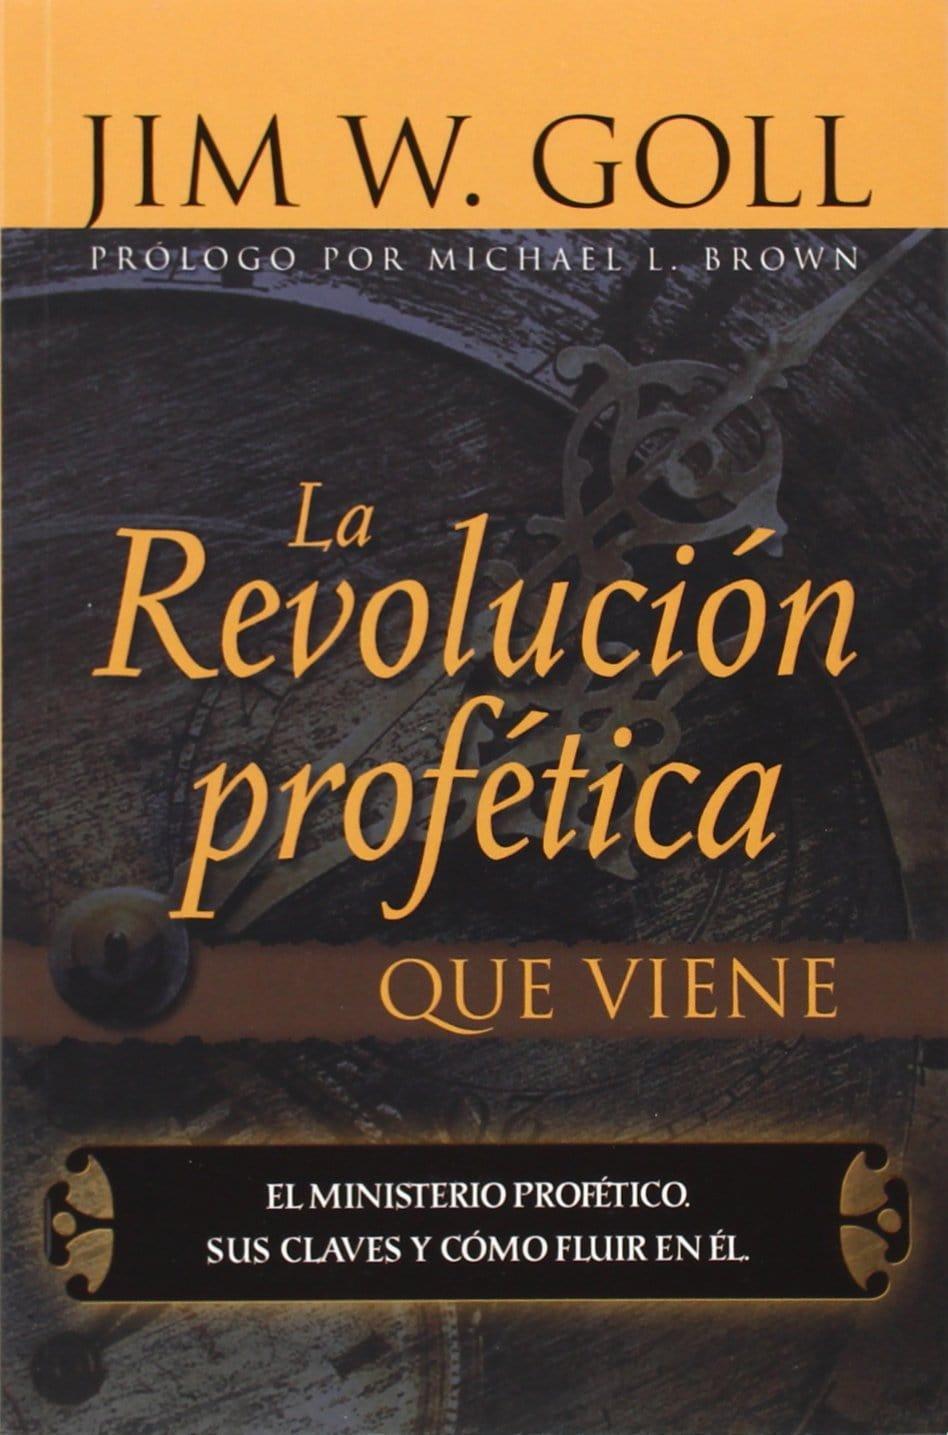 La Revolución Profética -Jim W. Goll - Pura Vida Books